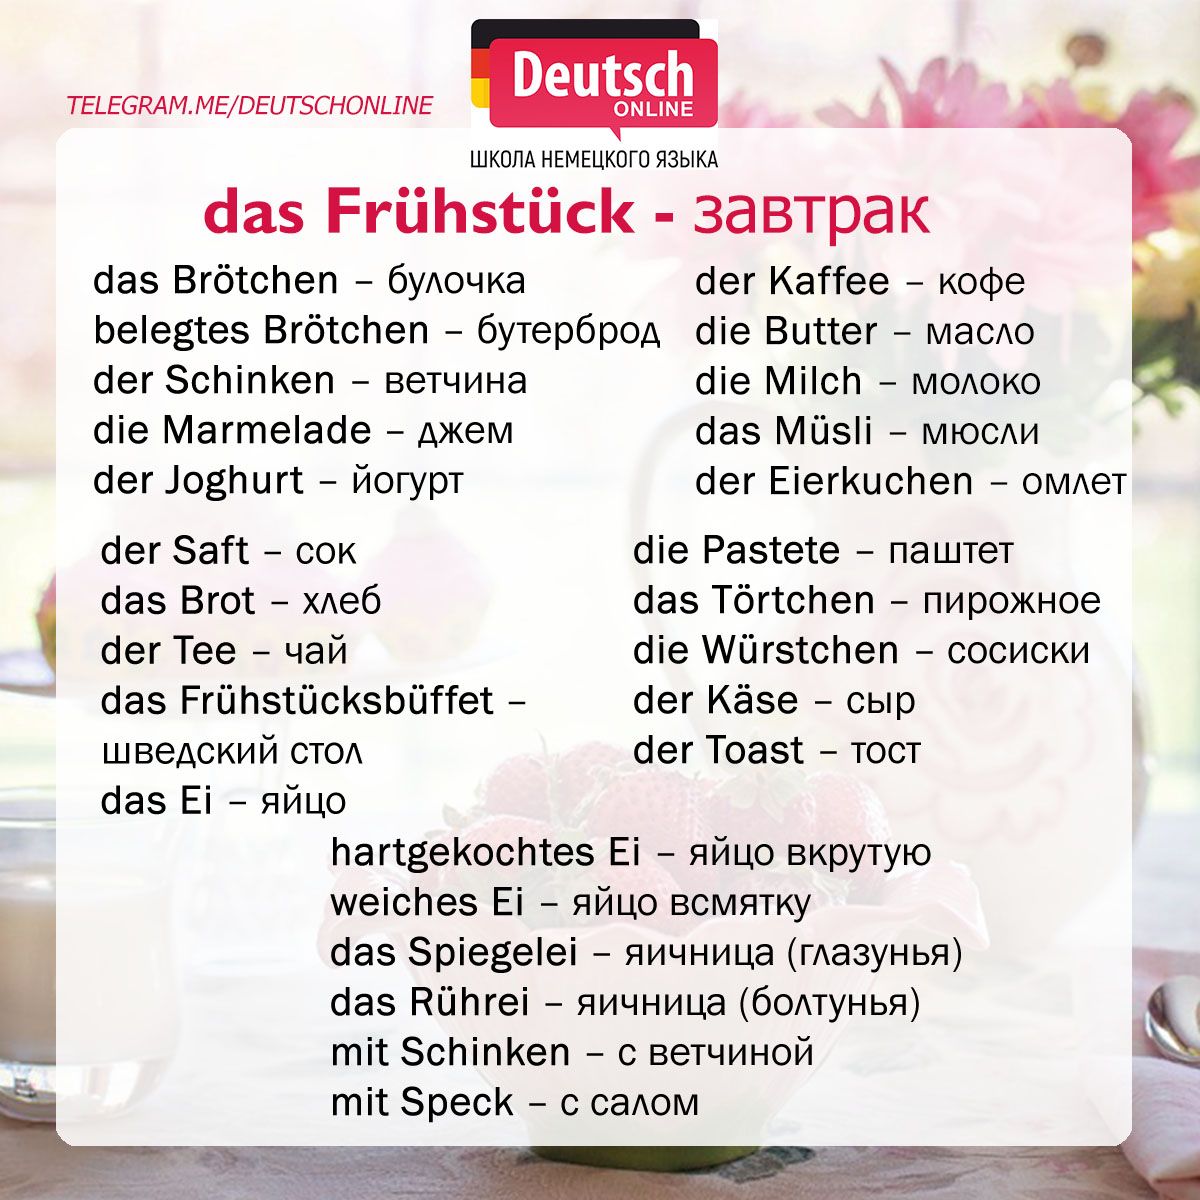 Завтрак на немецком языке